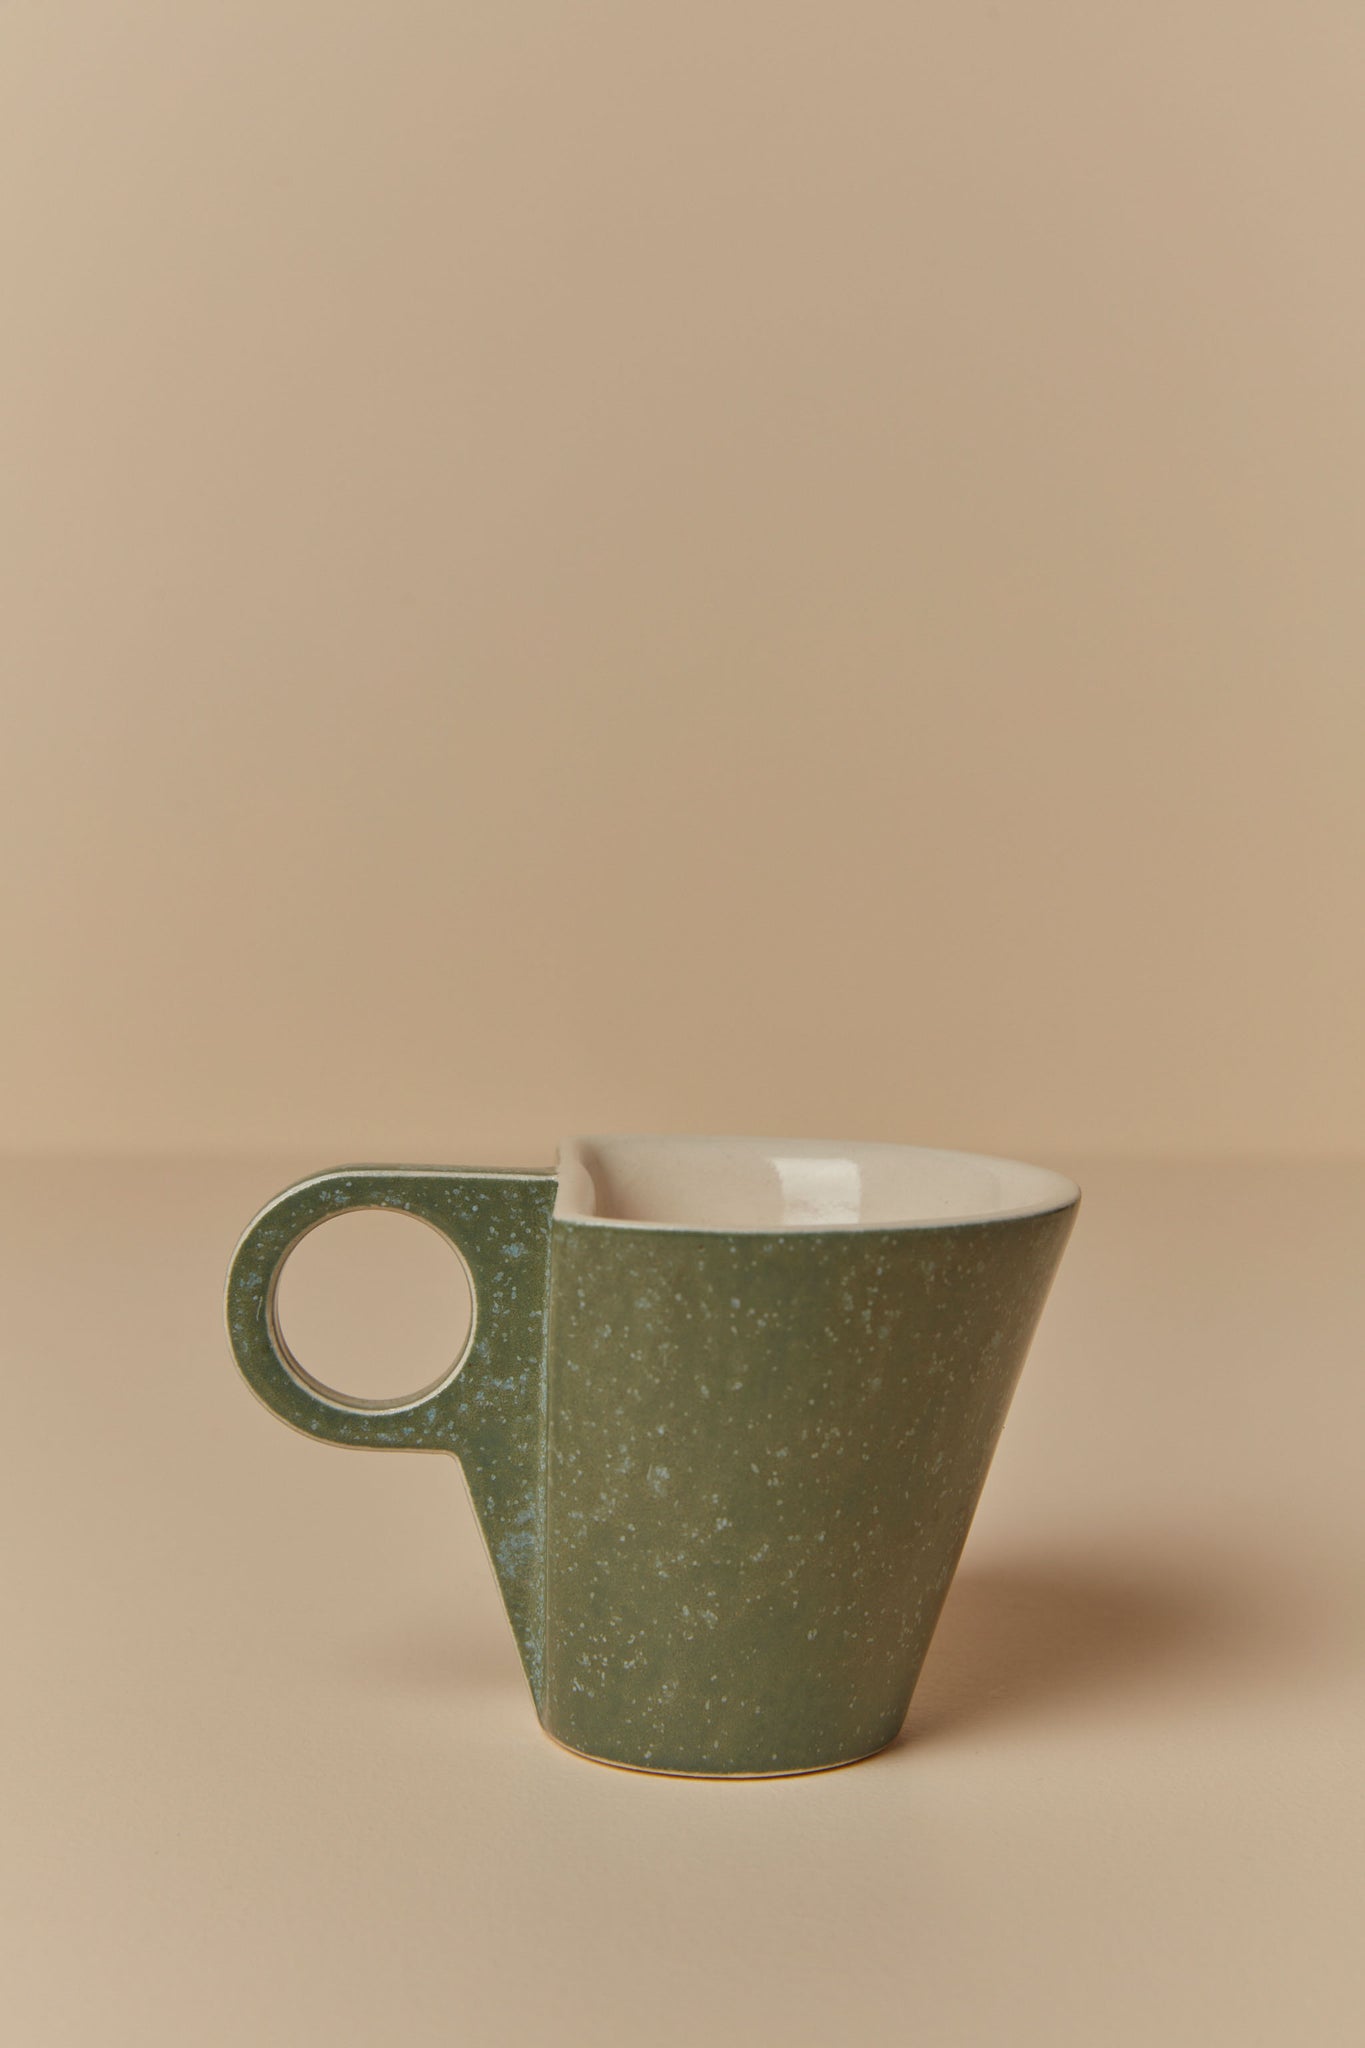 Yuro Cuchor - Small Deco Mug, Speckle Green and Cream